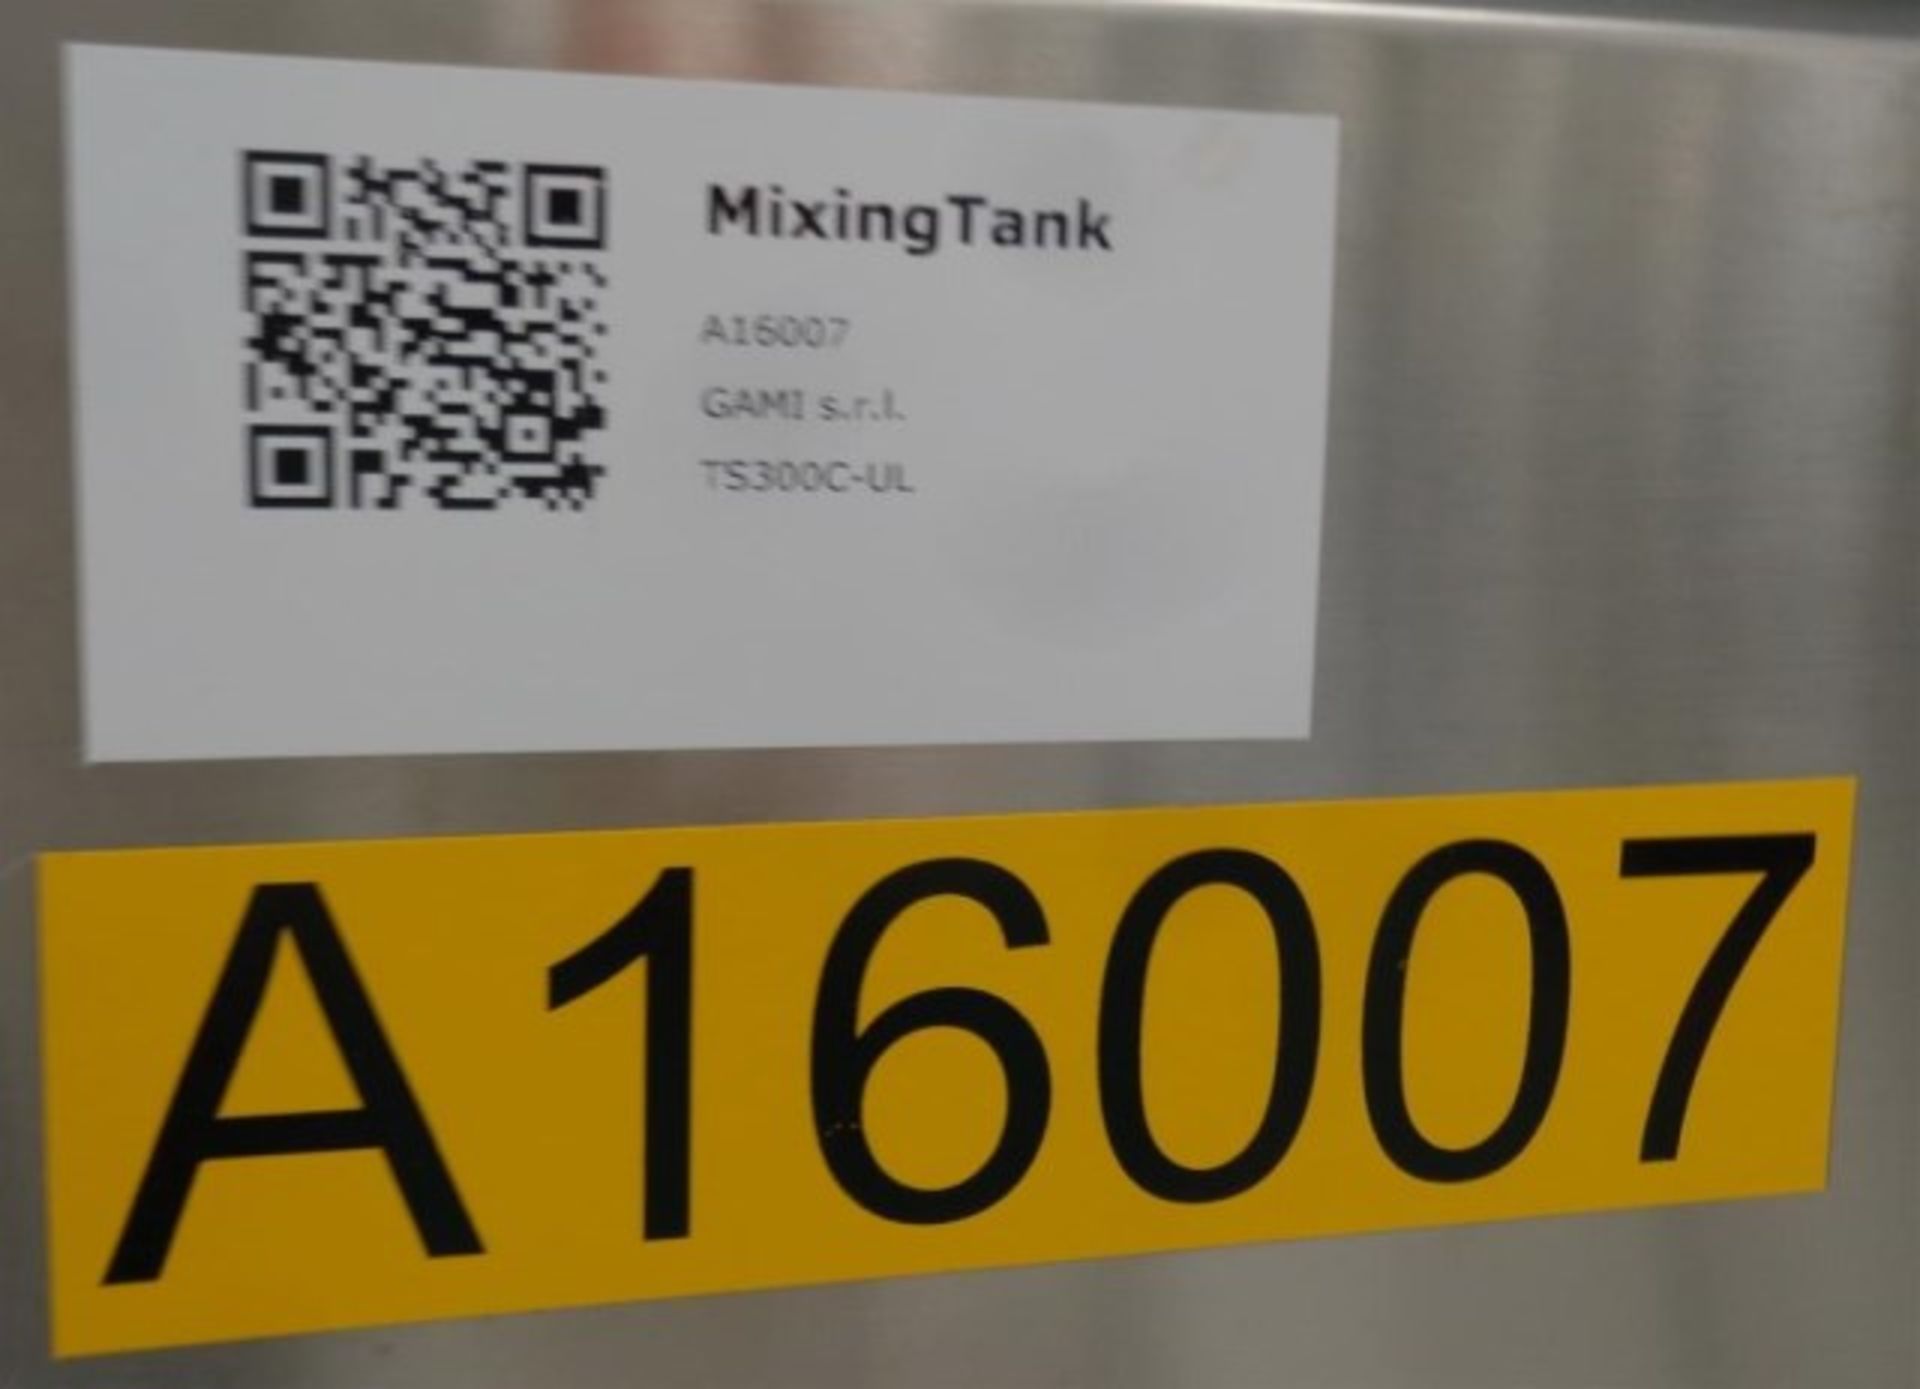 Stainless Steel 300 kg Melting Tank - Image 4 of 4